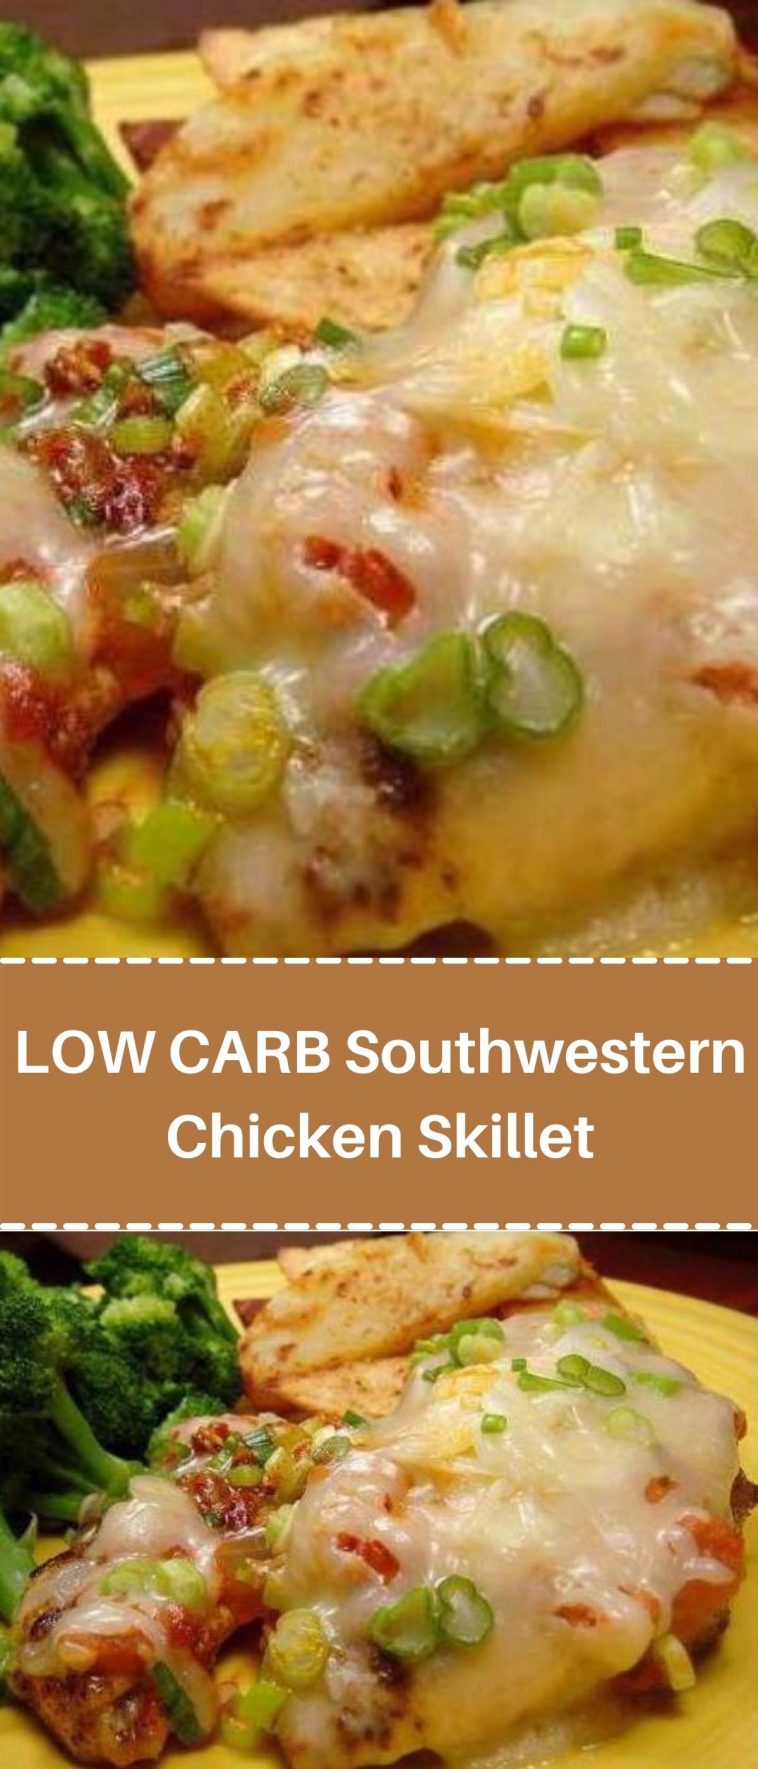 LOW CARB Southwestern Chicken Skillet